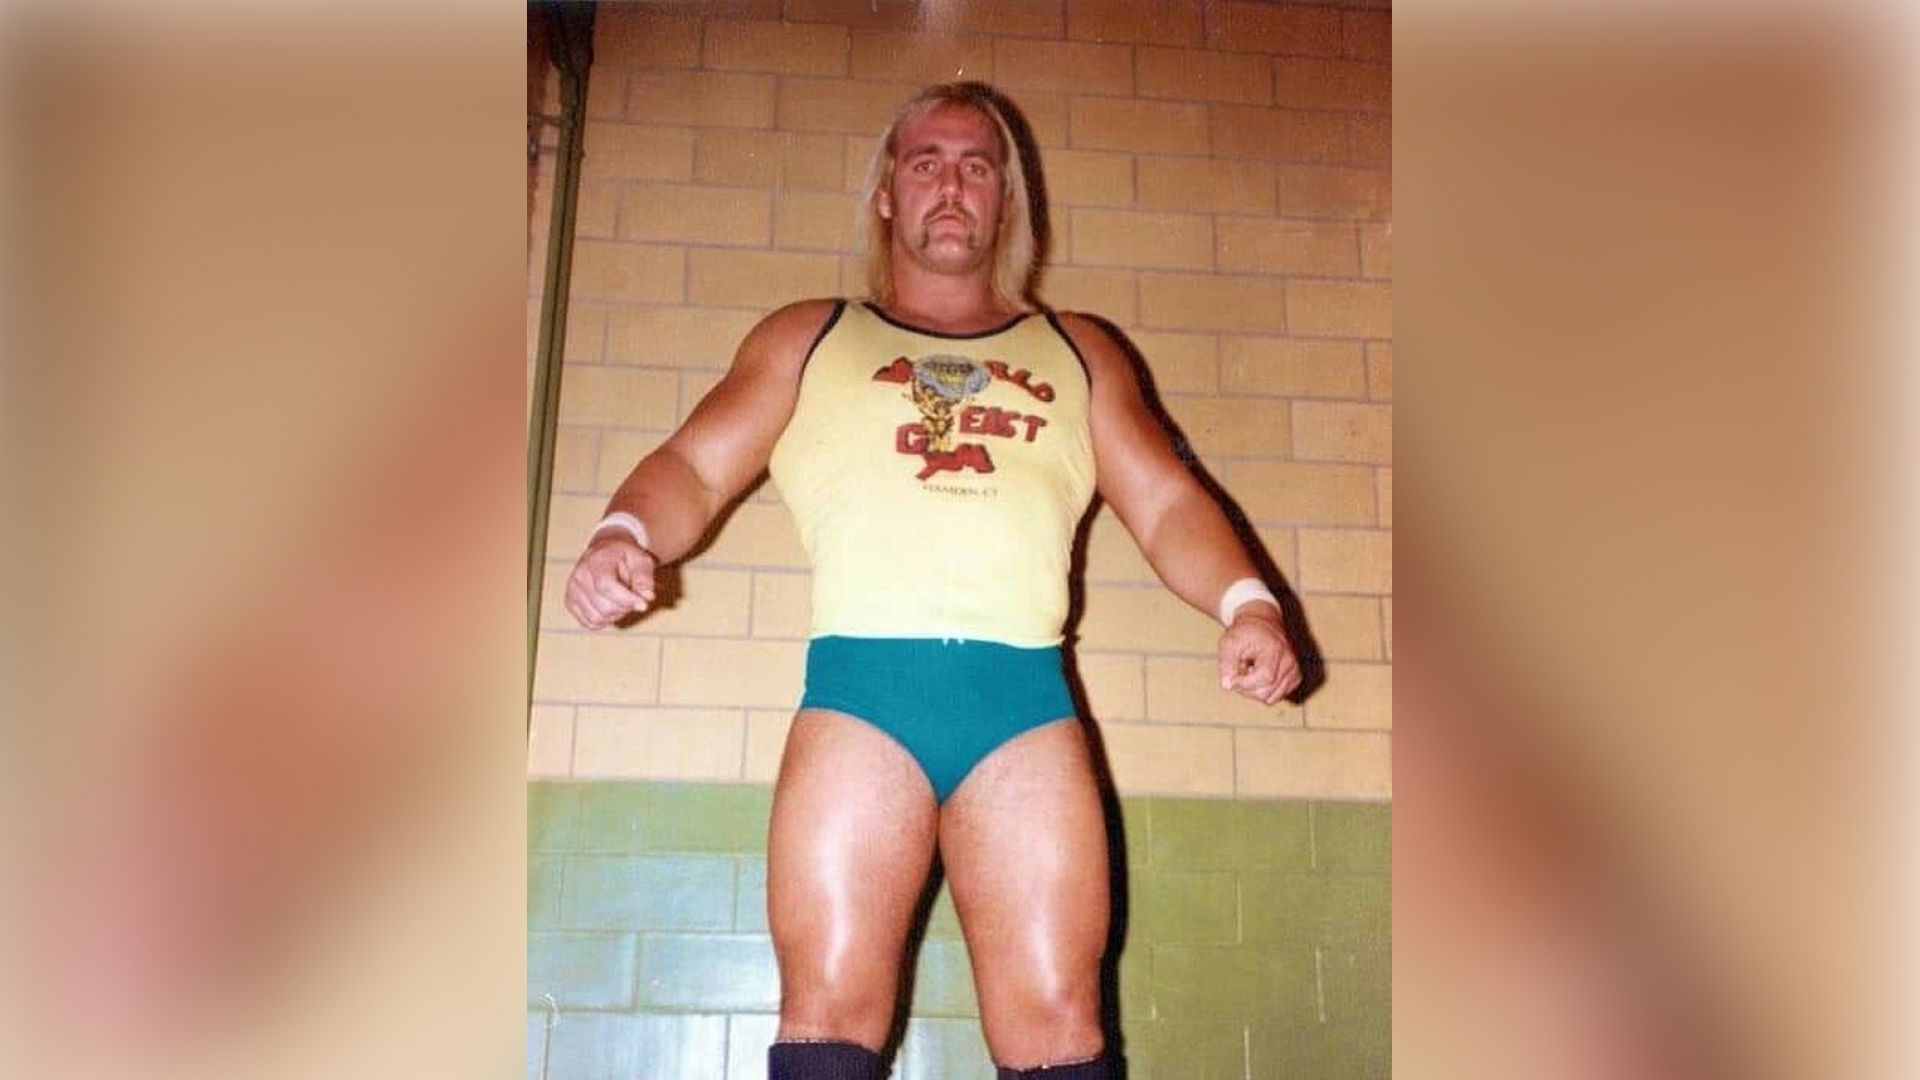 Hulk Hogan in the early years